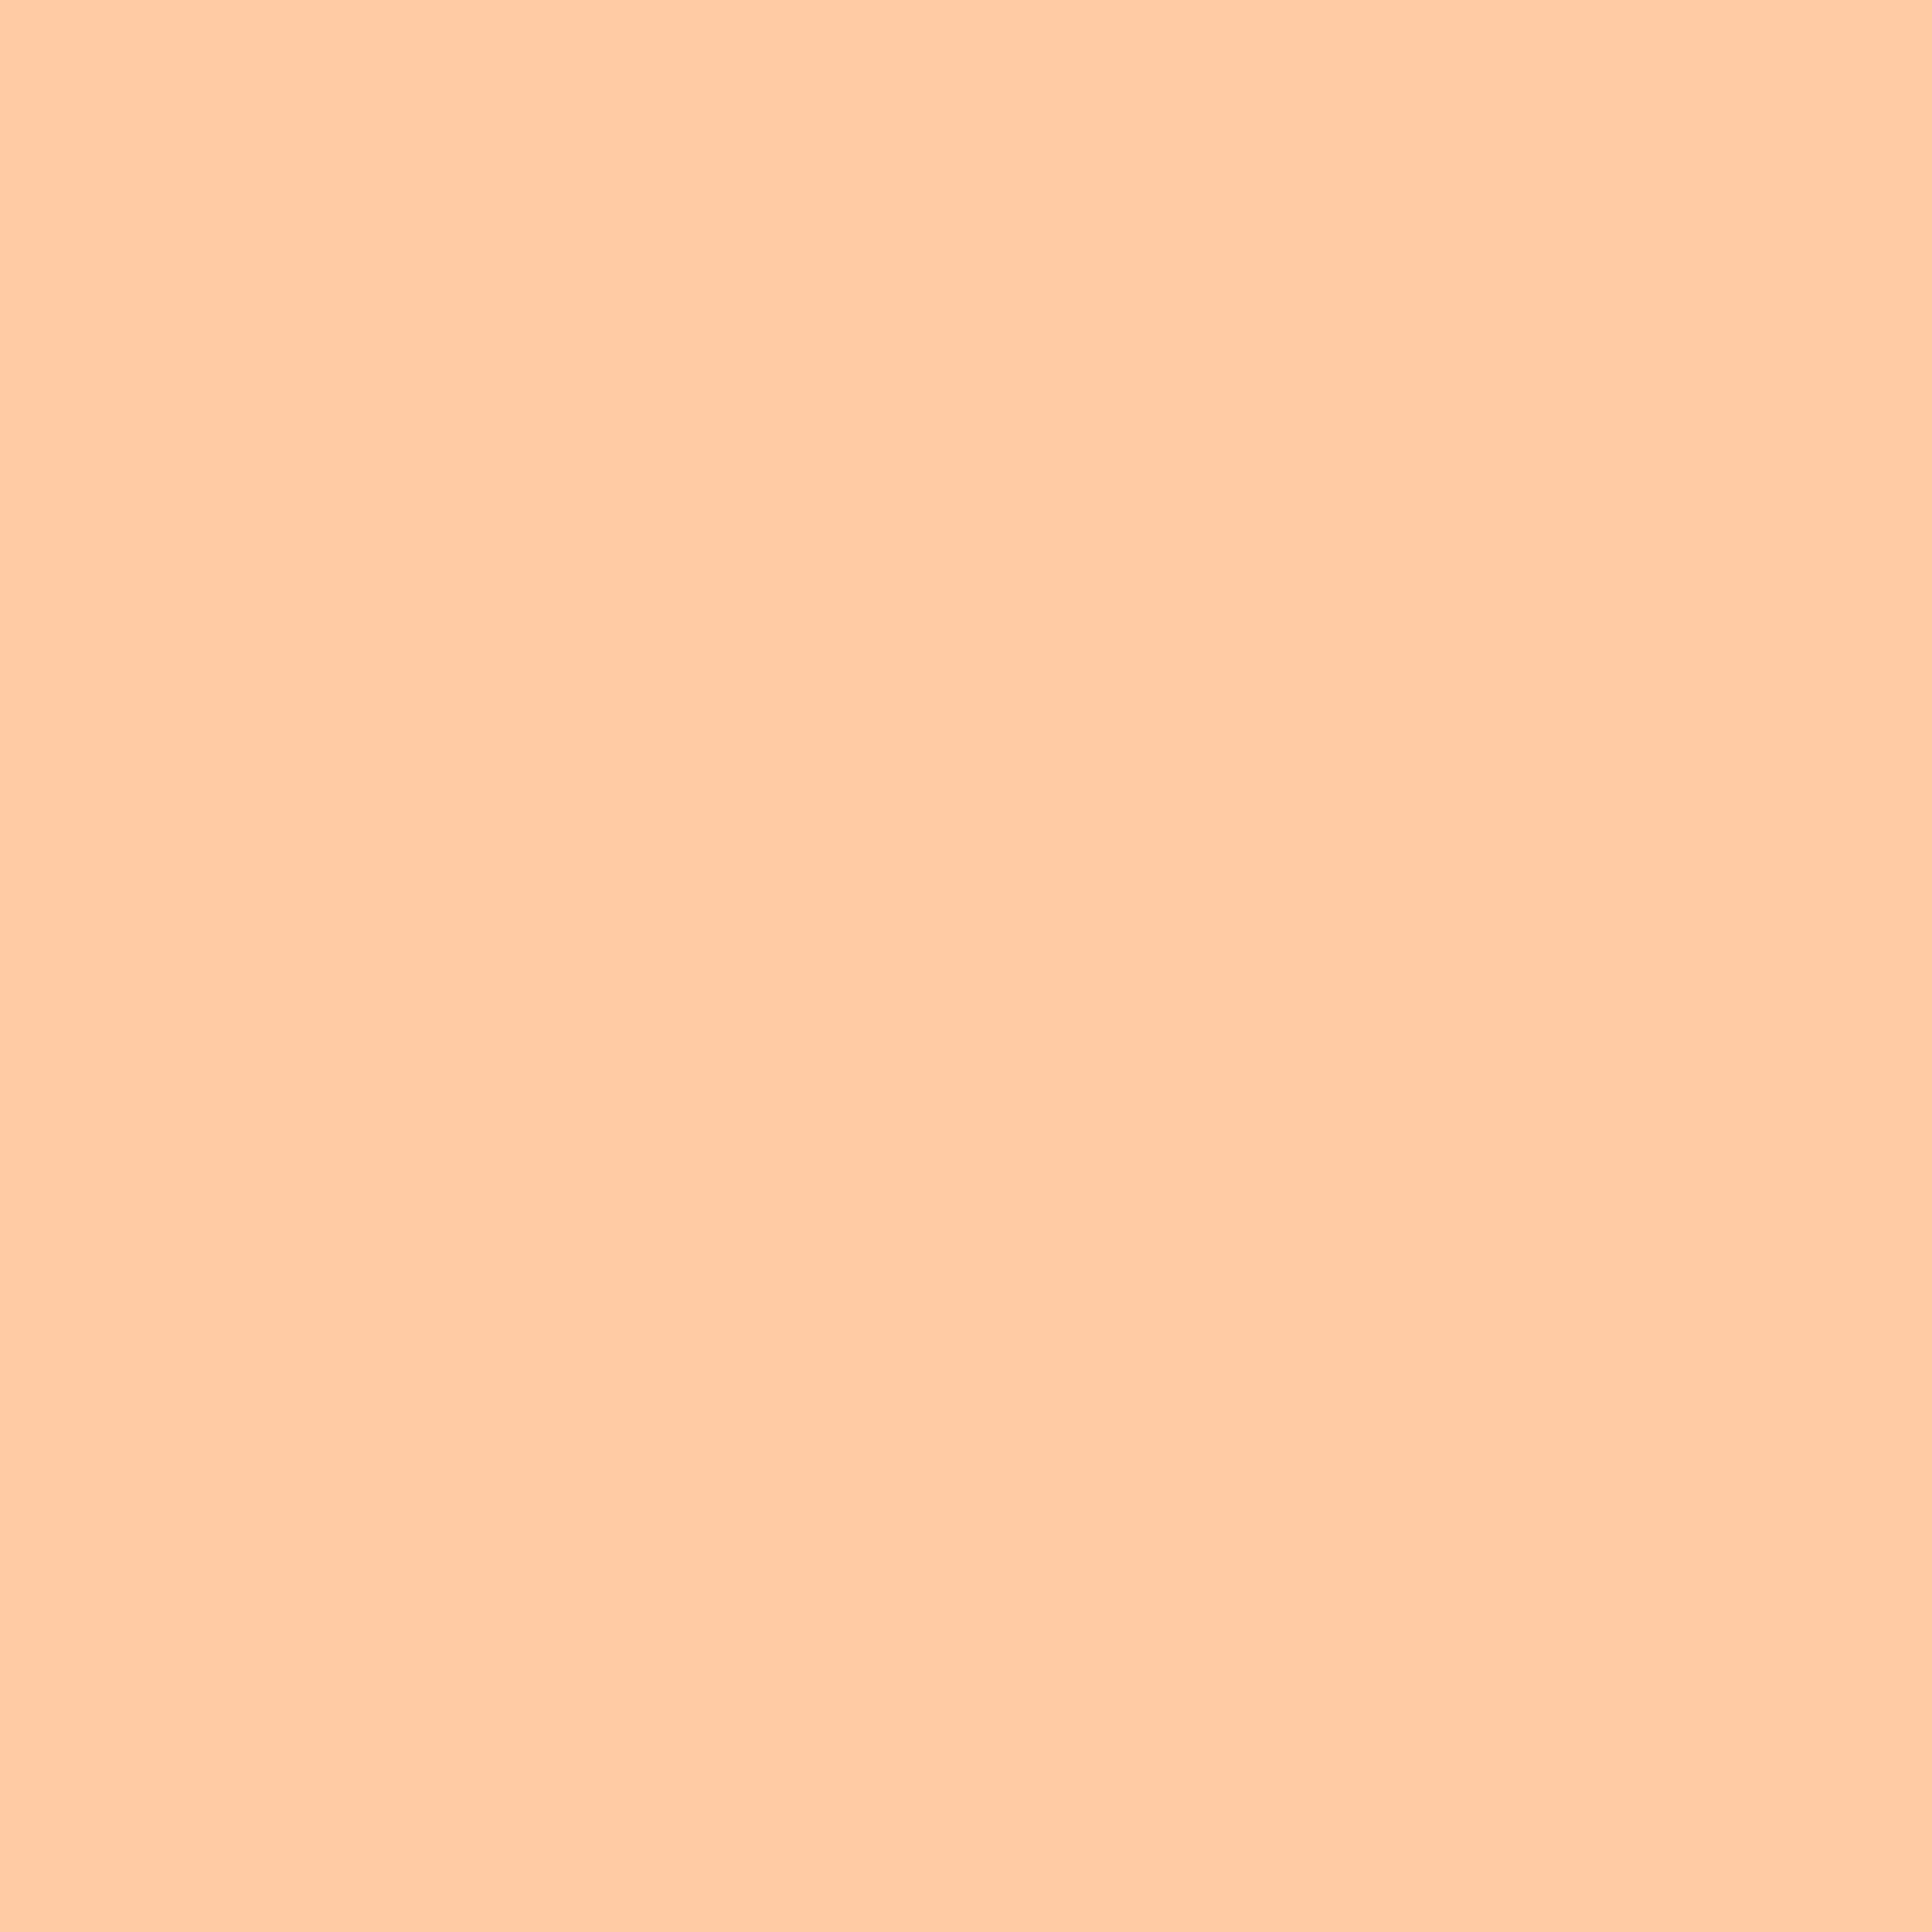 2732x2732 Peach Crayola Solid Color Background